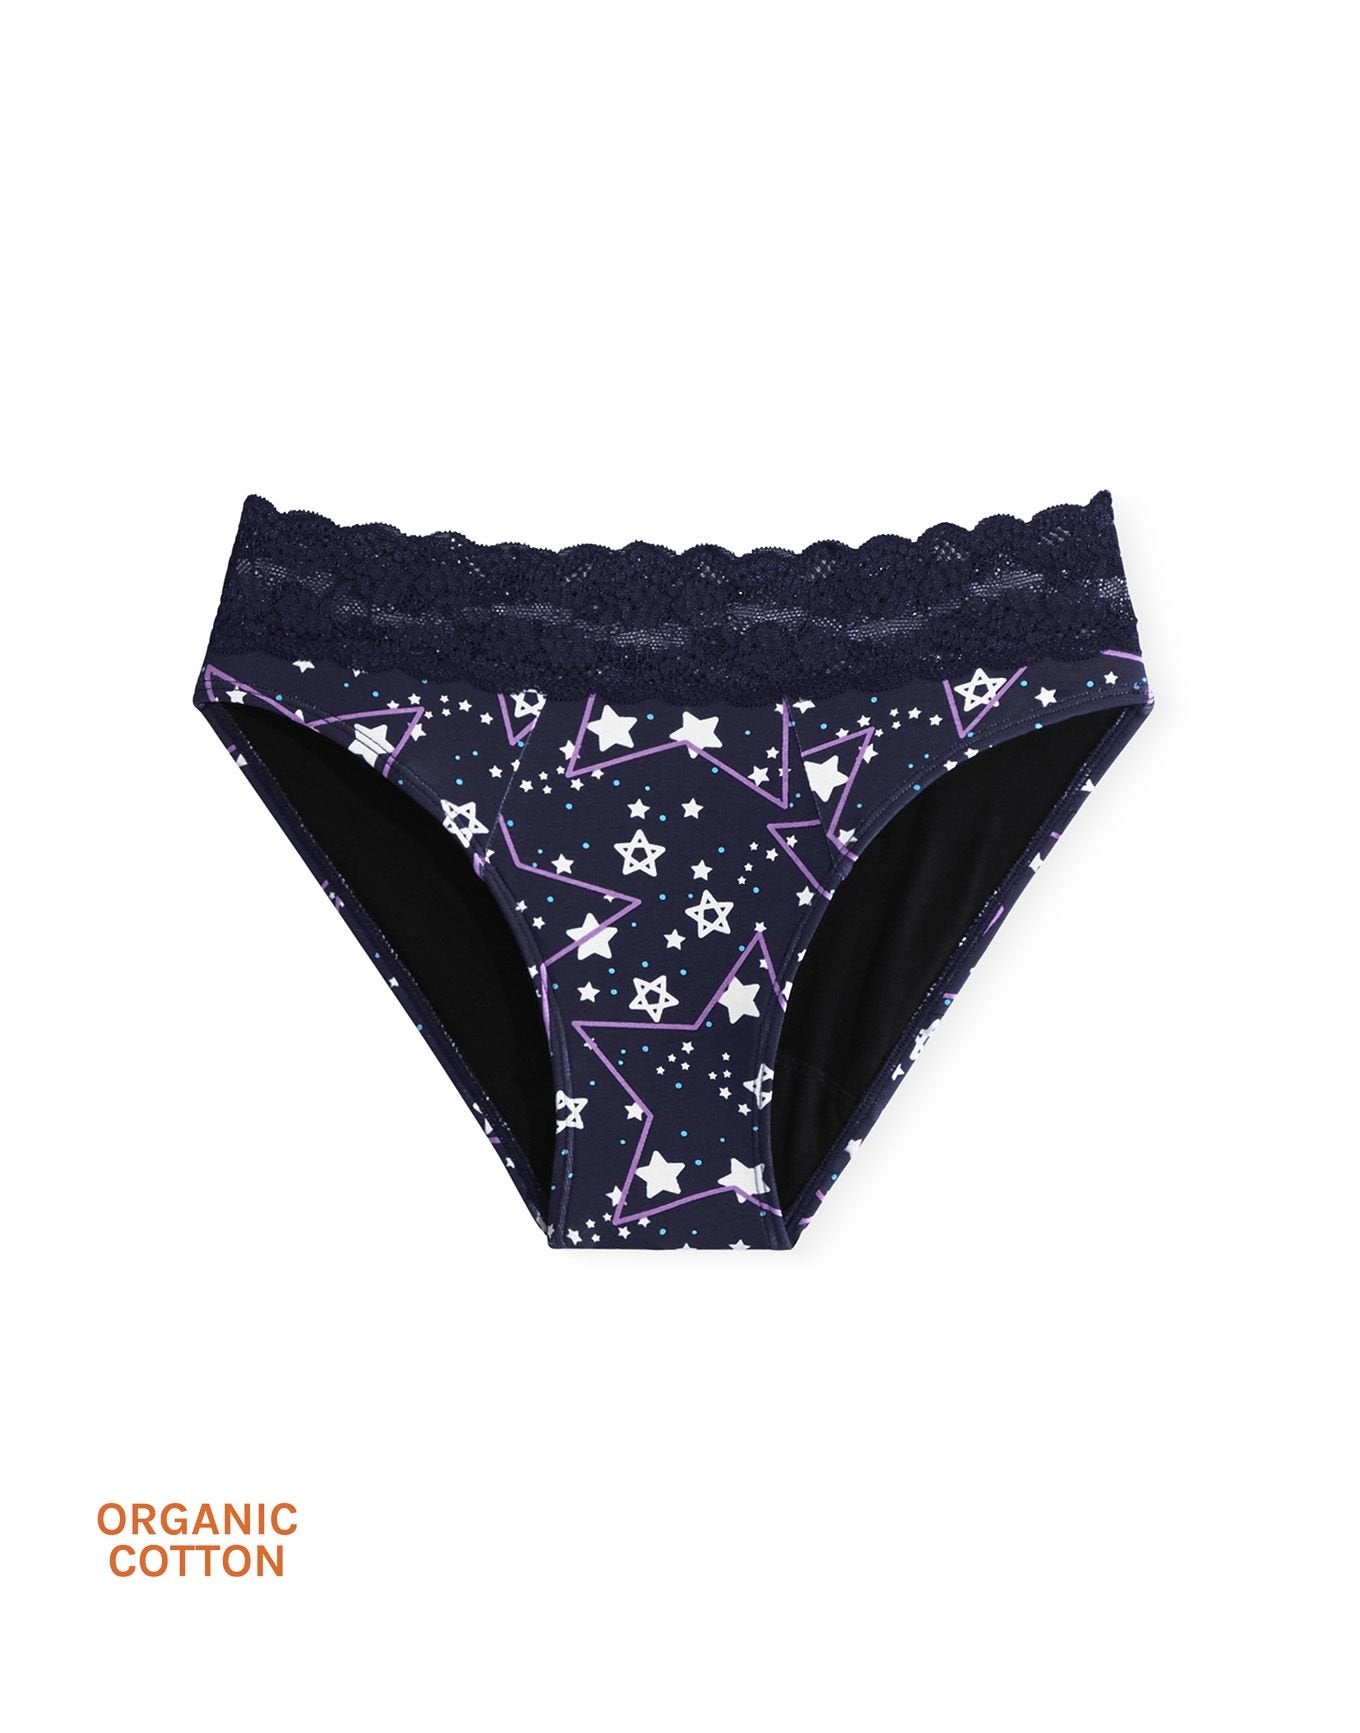 Joyja Alice period-proof panty in color Seeing Stars C01 and shape bikini